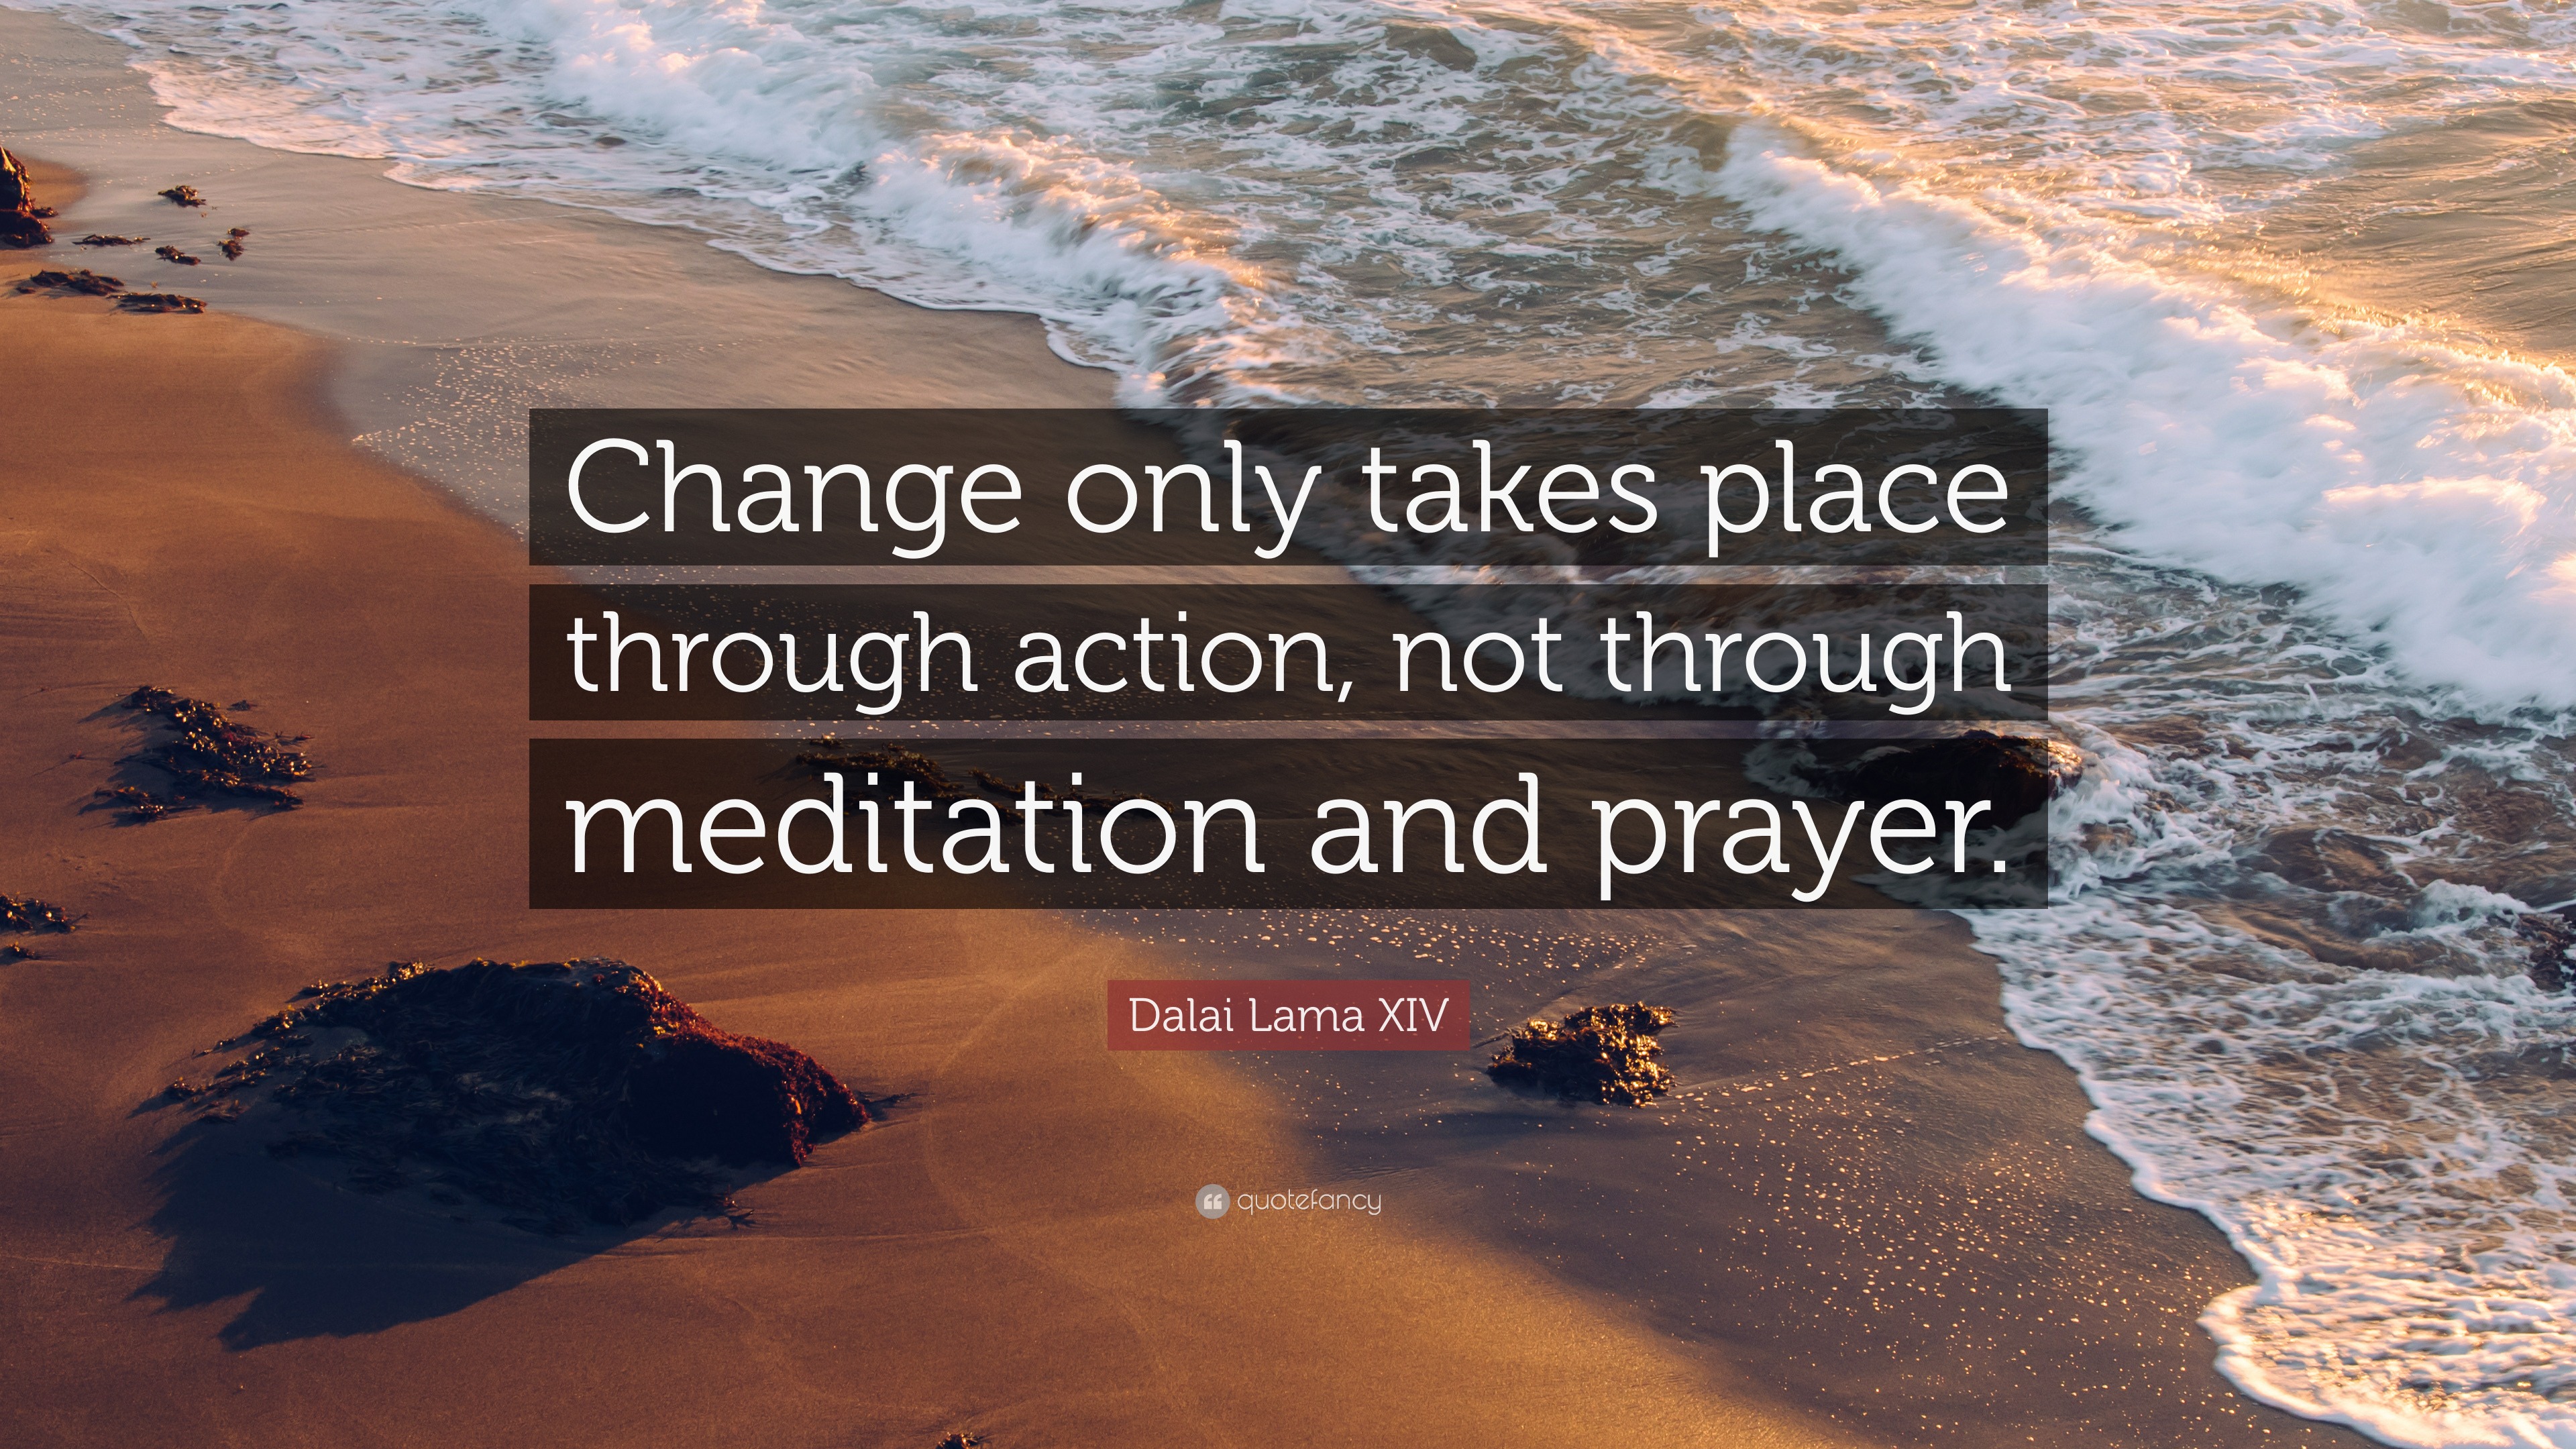 dalai lama quotes on change